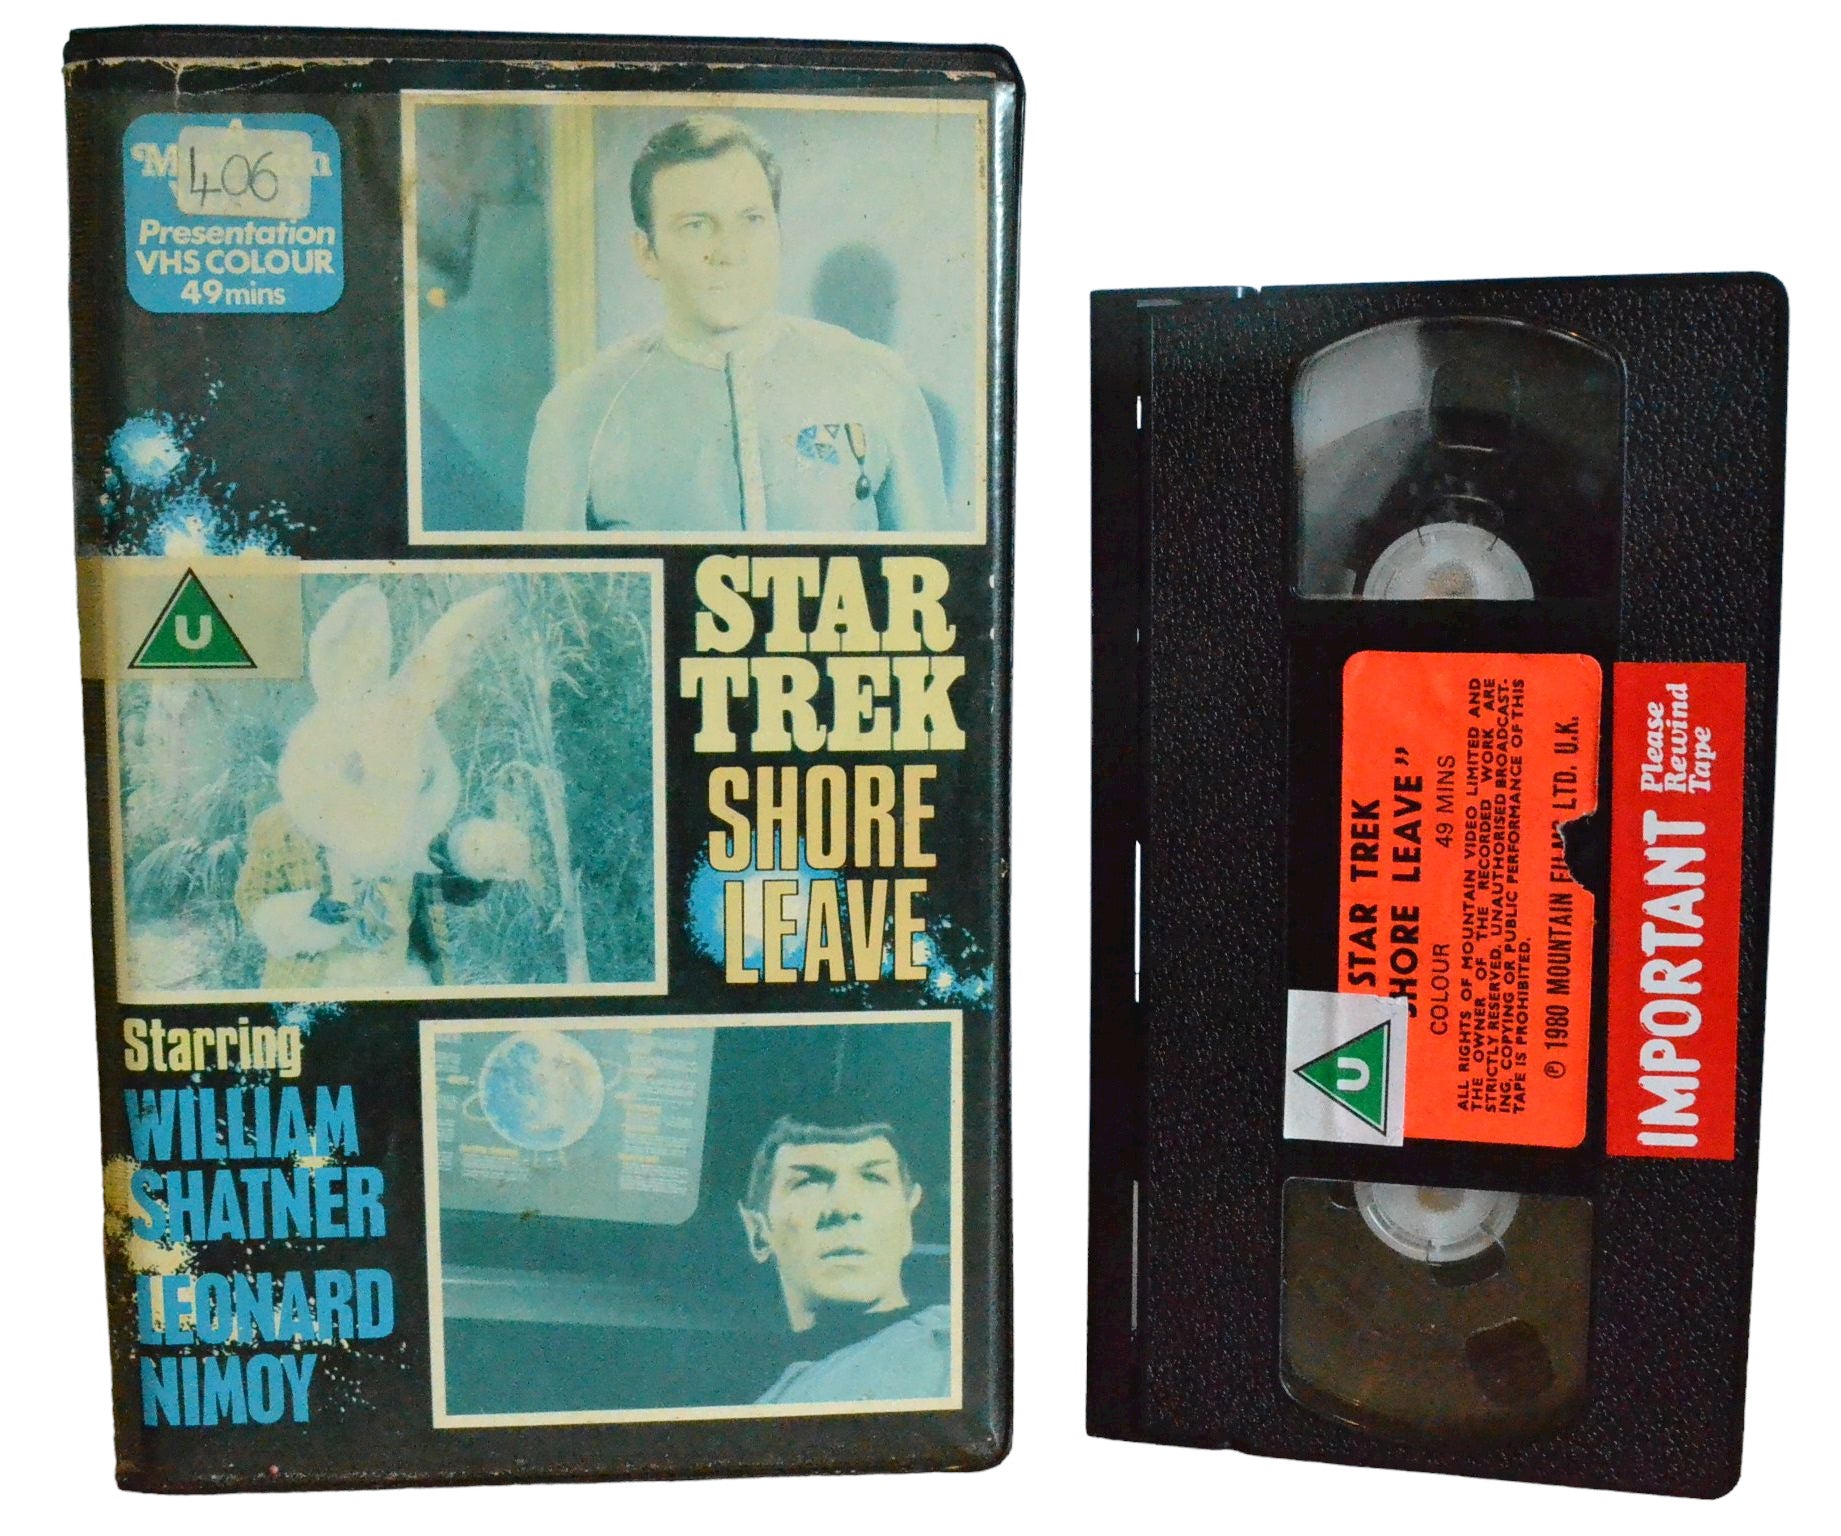 Star Trek Shore Leave - William Shantner - Mountain Video - Large Box - PAL - VHS-